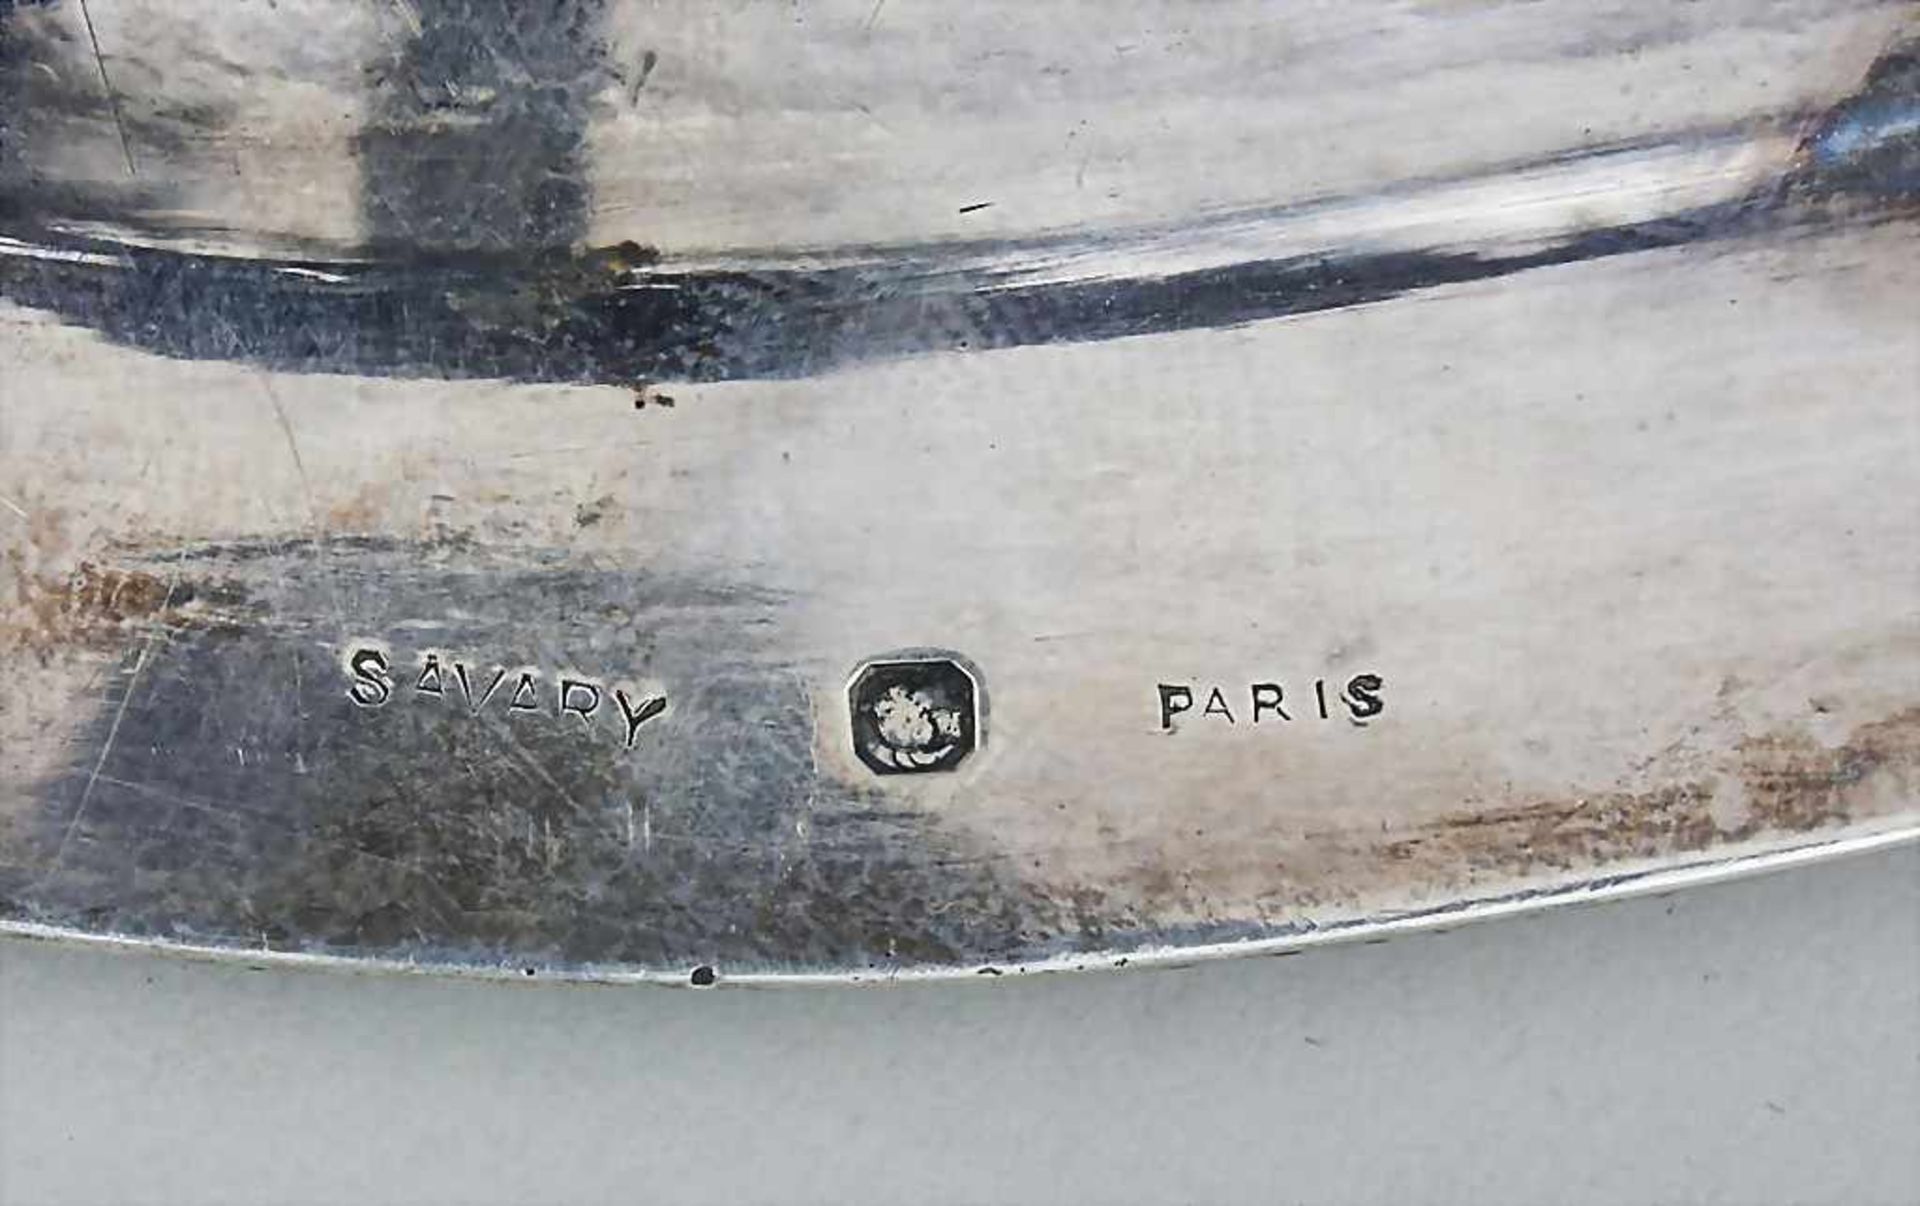 Ovales Tablett / Oval Silver Tray, Savary, Paris, Ende 19. Jh.oval fassoniertes Tablett mit - Bild 2 aus 3